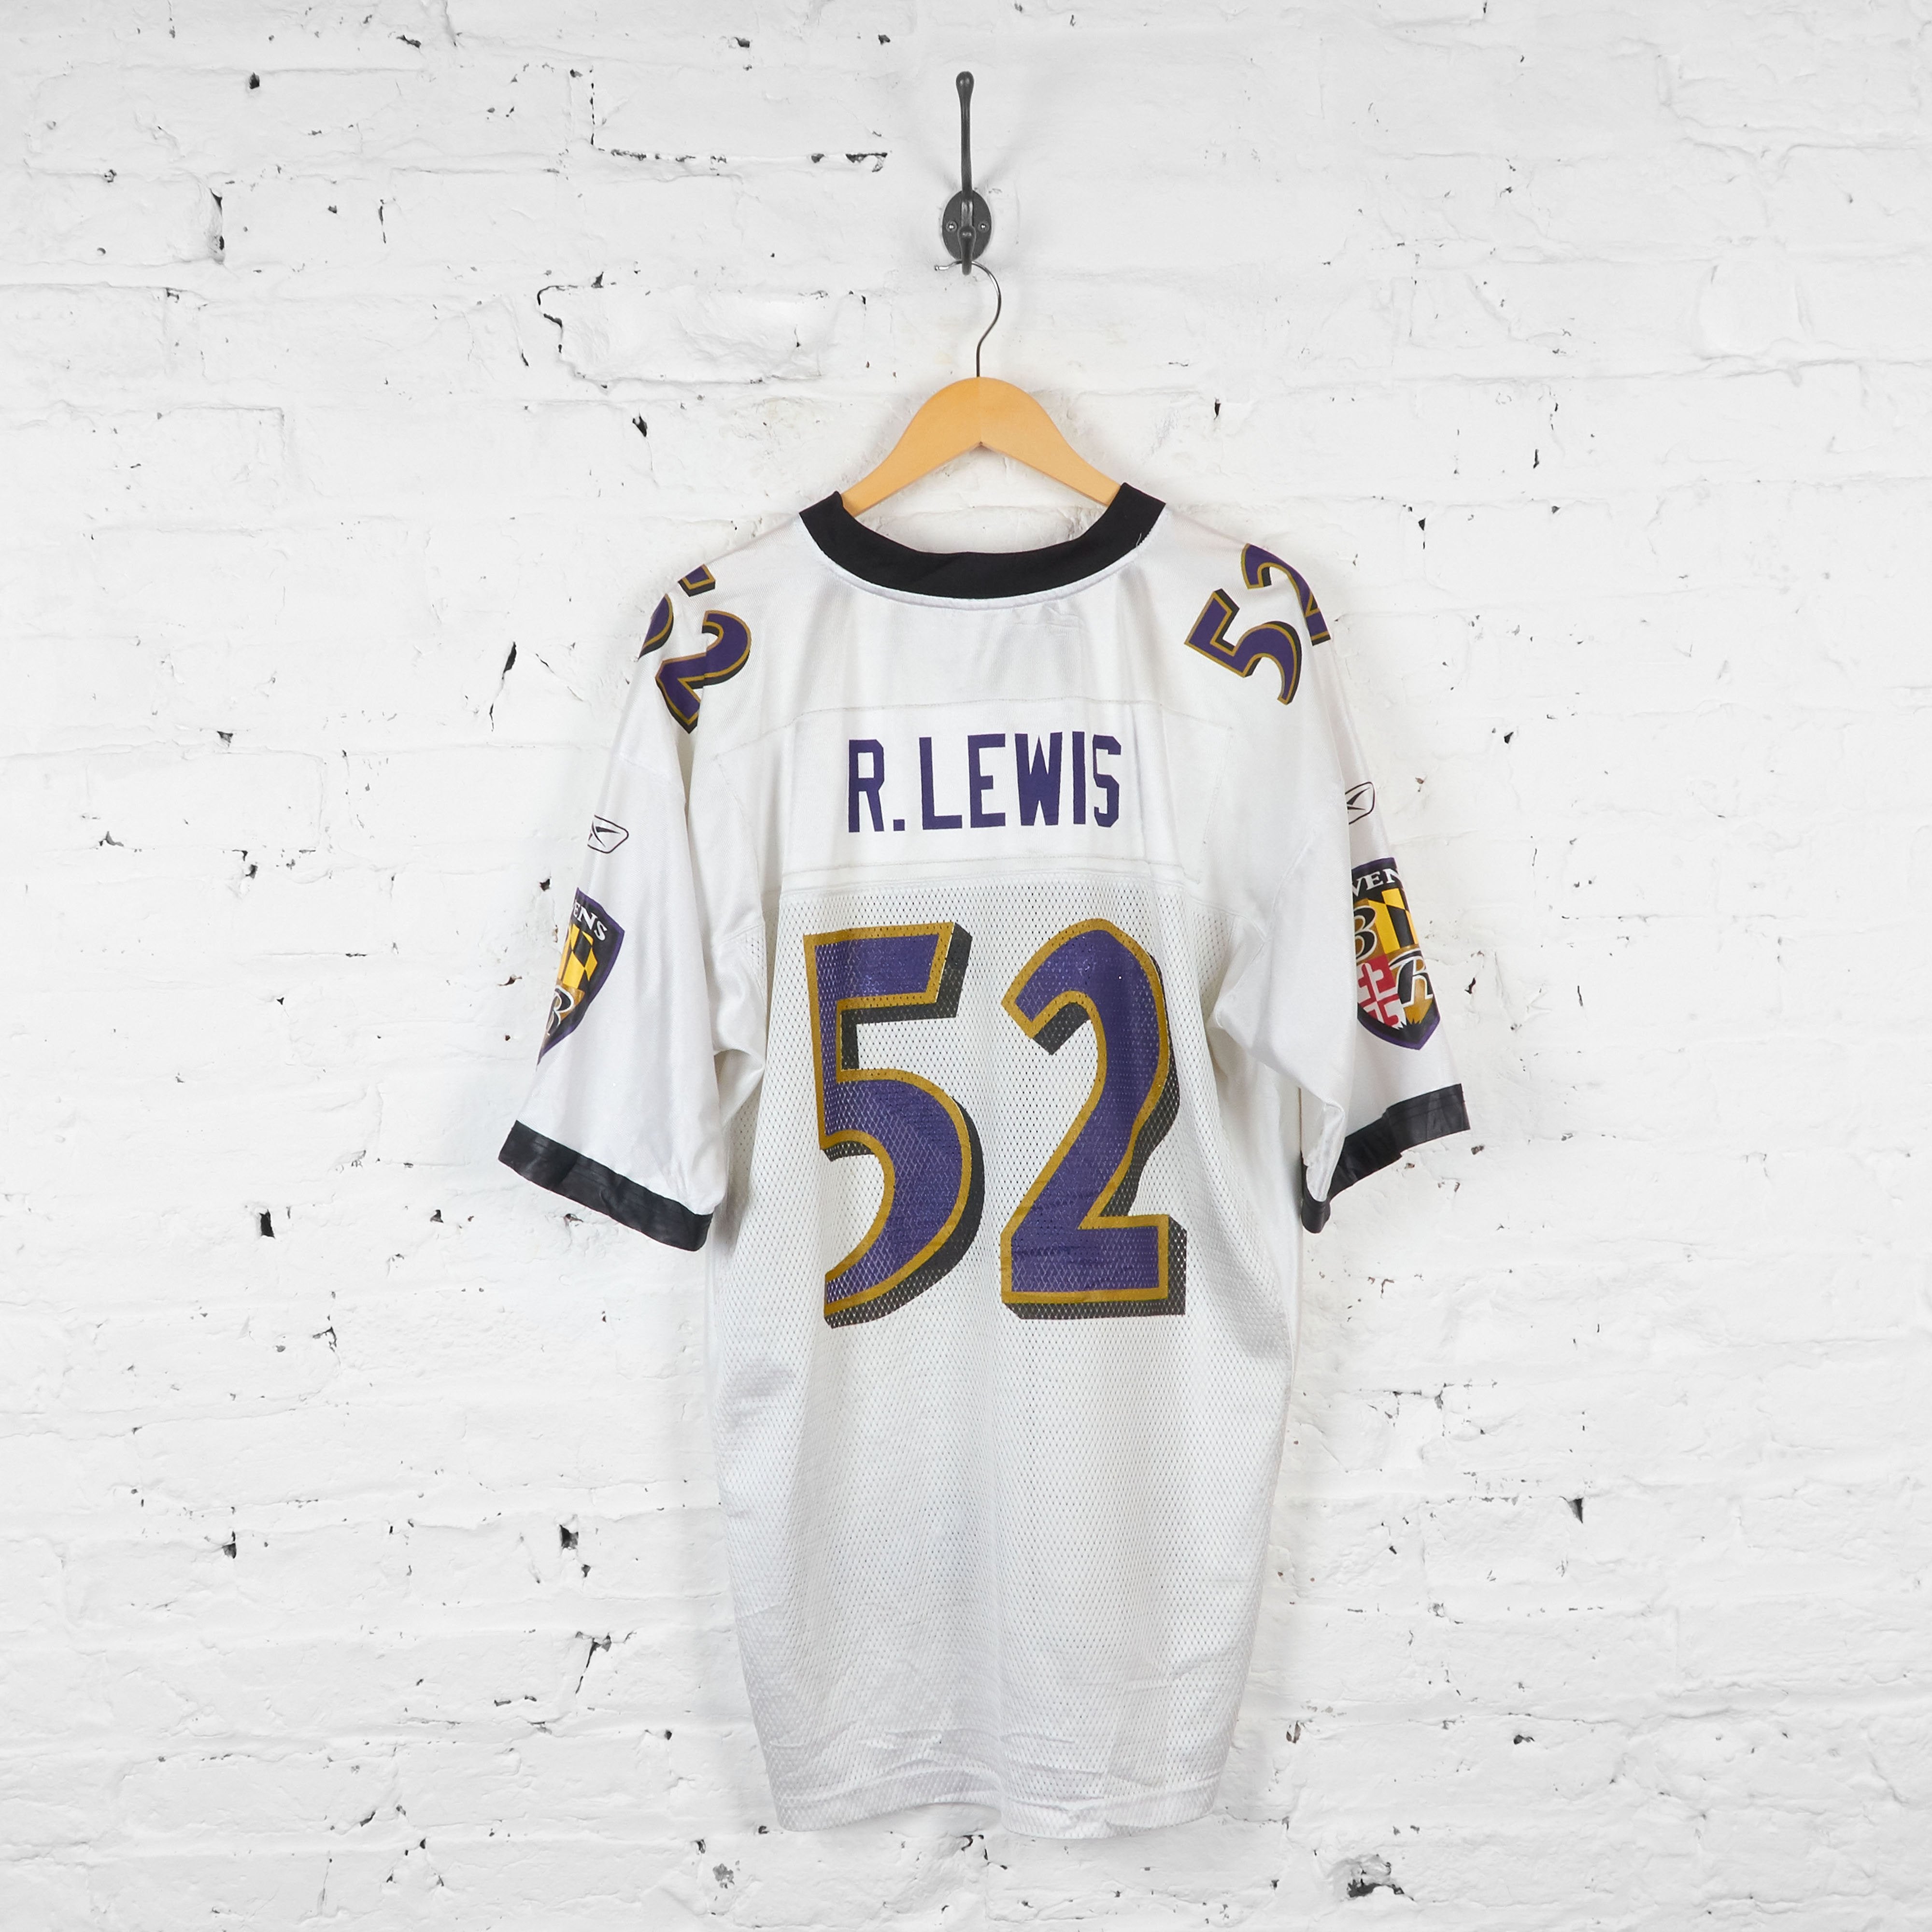 Reebok NFL Jersey Ravens 'R.Lewis' Vintage